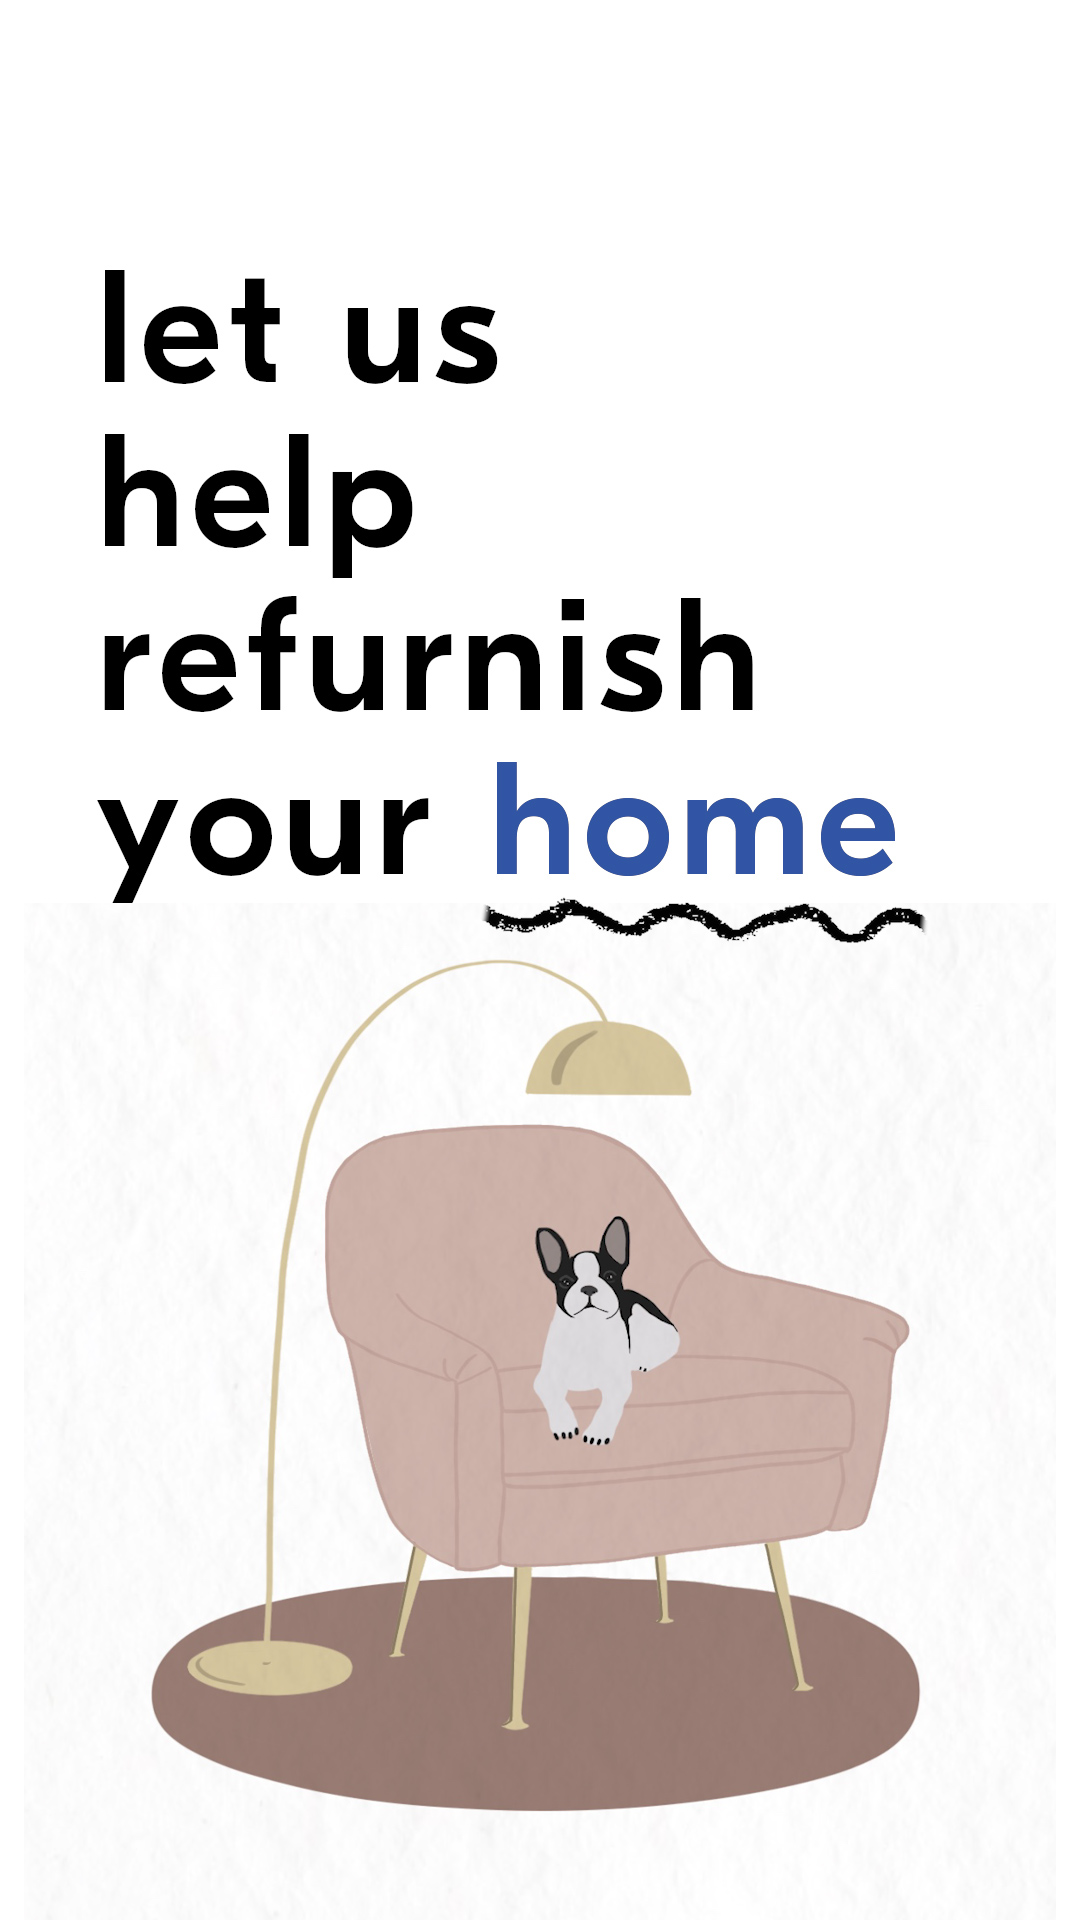 let us help refurbish your home